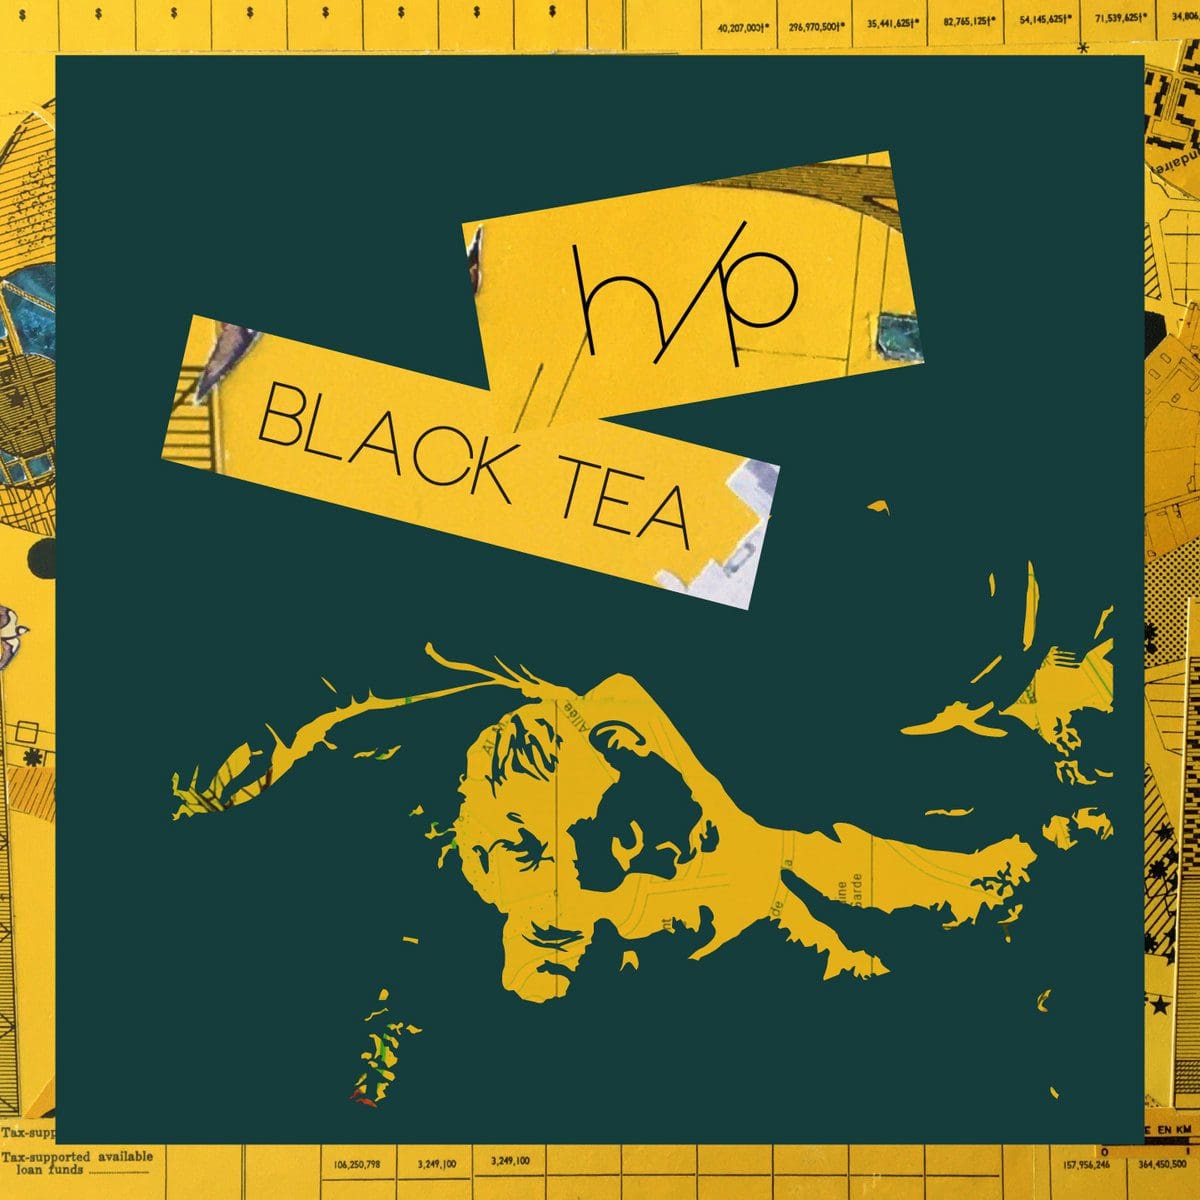 BOREDOMproduct releases h/p single 'Black Tea' as 'Programma' album suffers productional delay